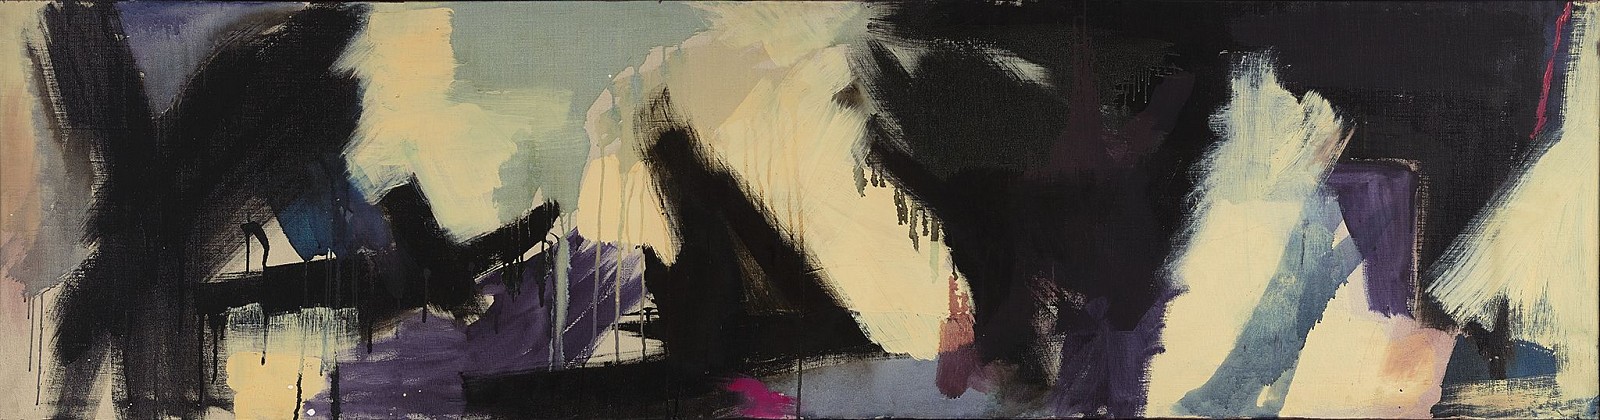 Judith Godwin, Battle | SOLD, 1956/57
Oil on canvas, 21 5/8 x 82 5/8 in. (54.9 x 209.9 cm)
GOD-00042